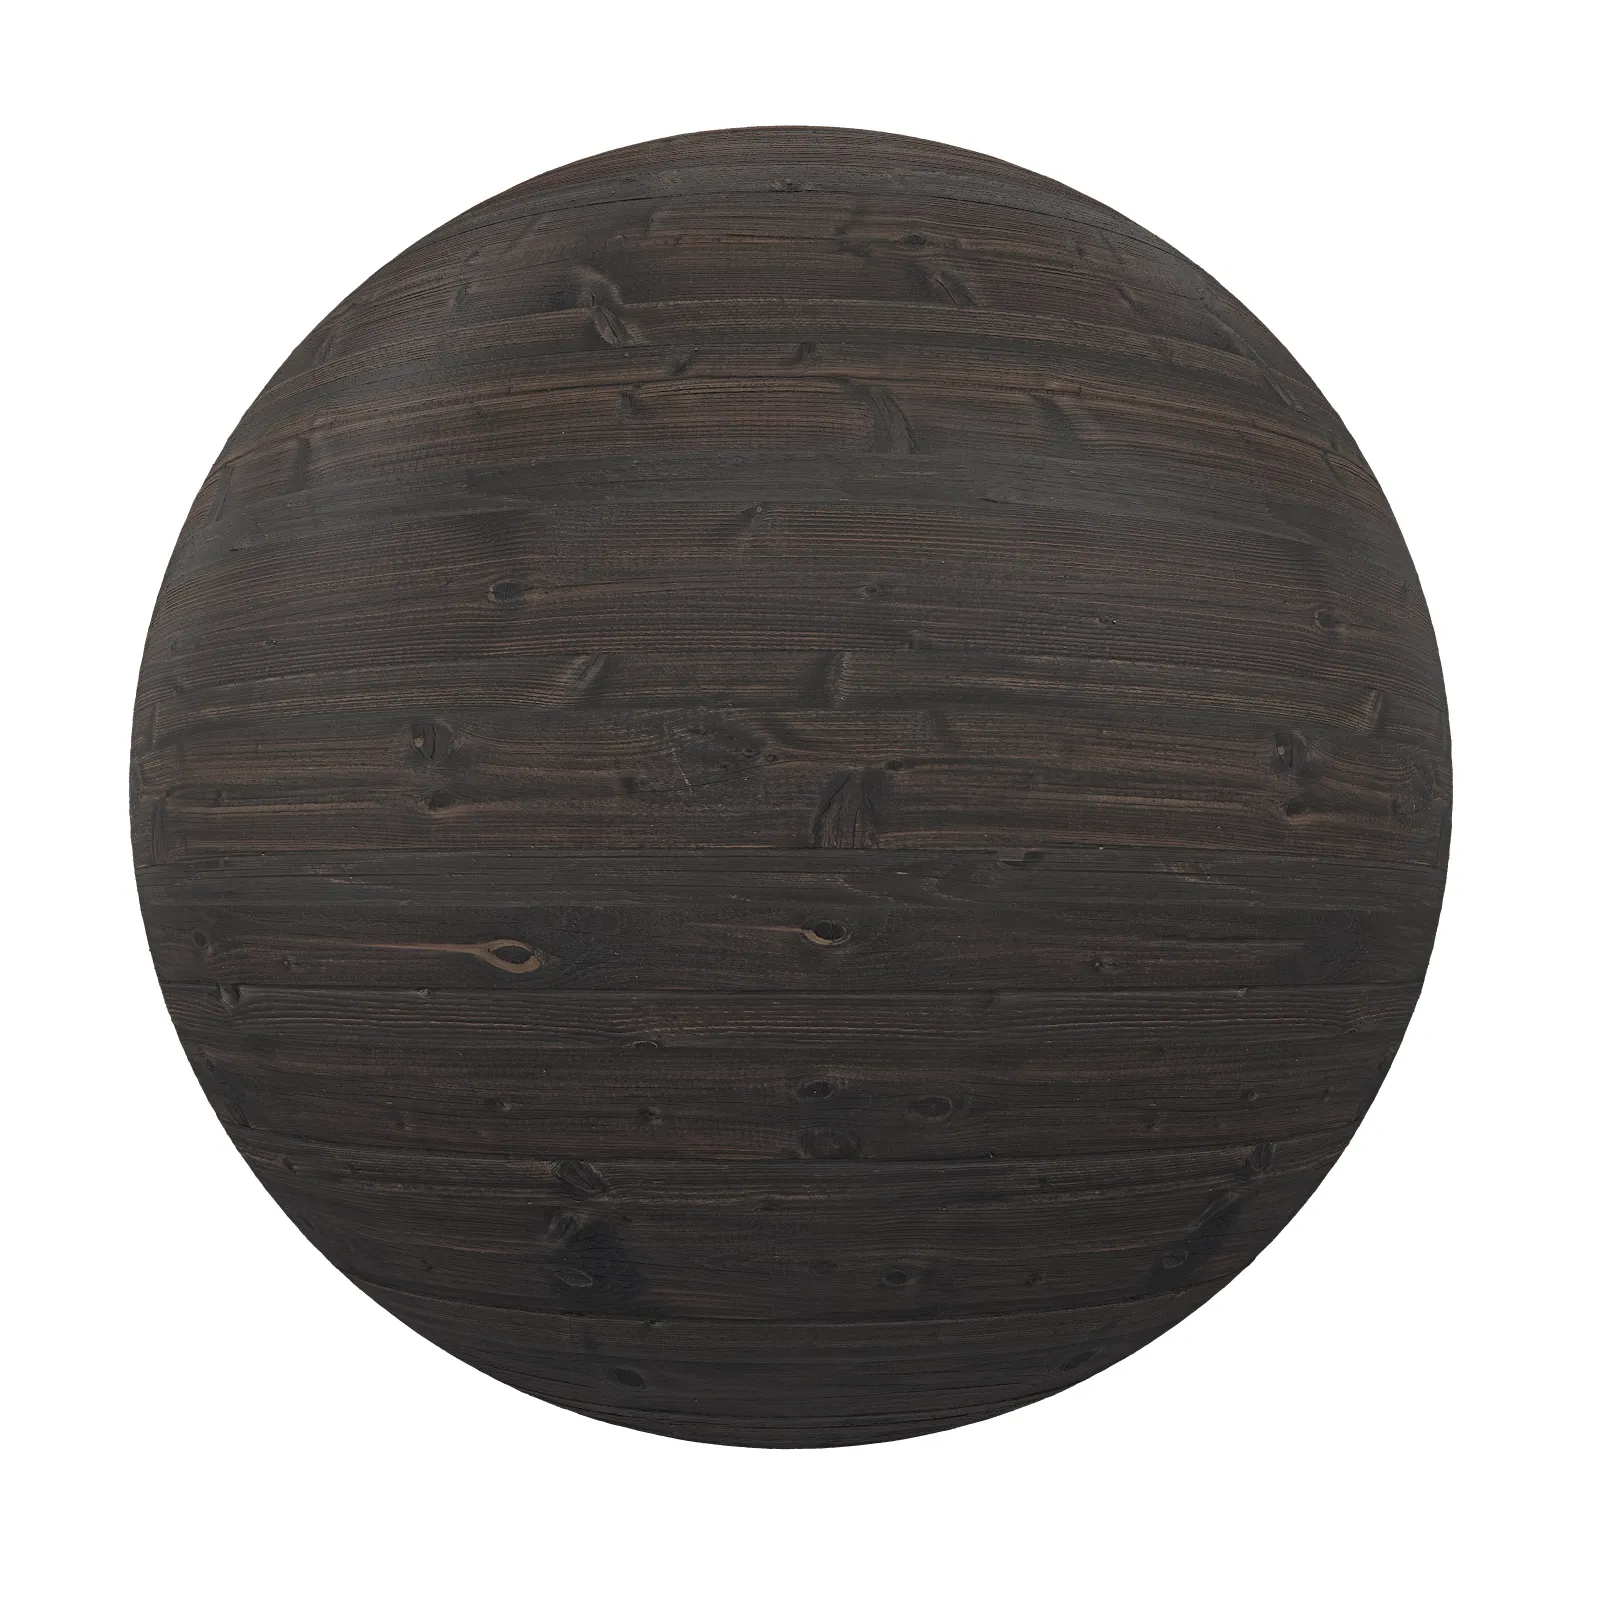 3ds Max Files – Texture – 8 – Wood Texture – 84 – Wood Texture by Minh Nguyen